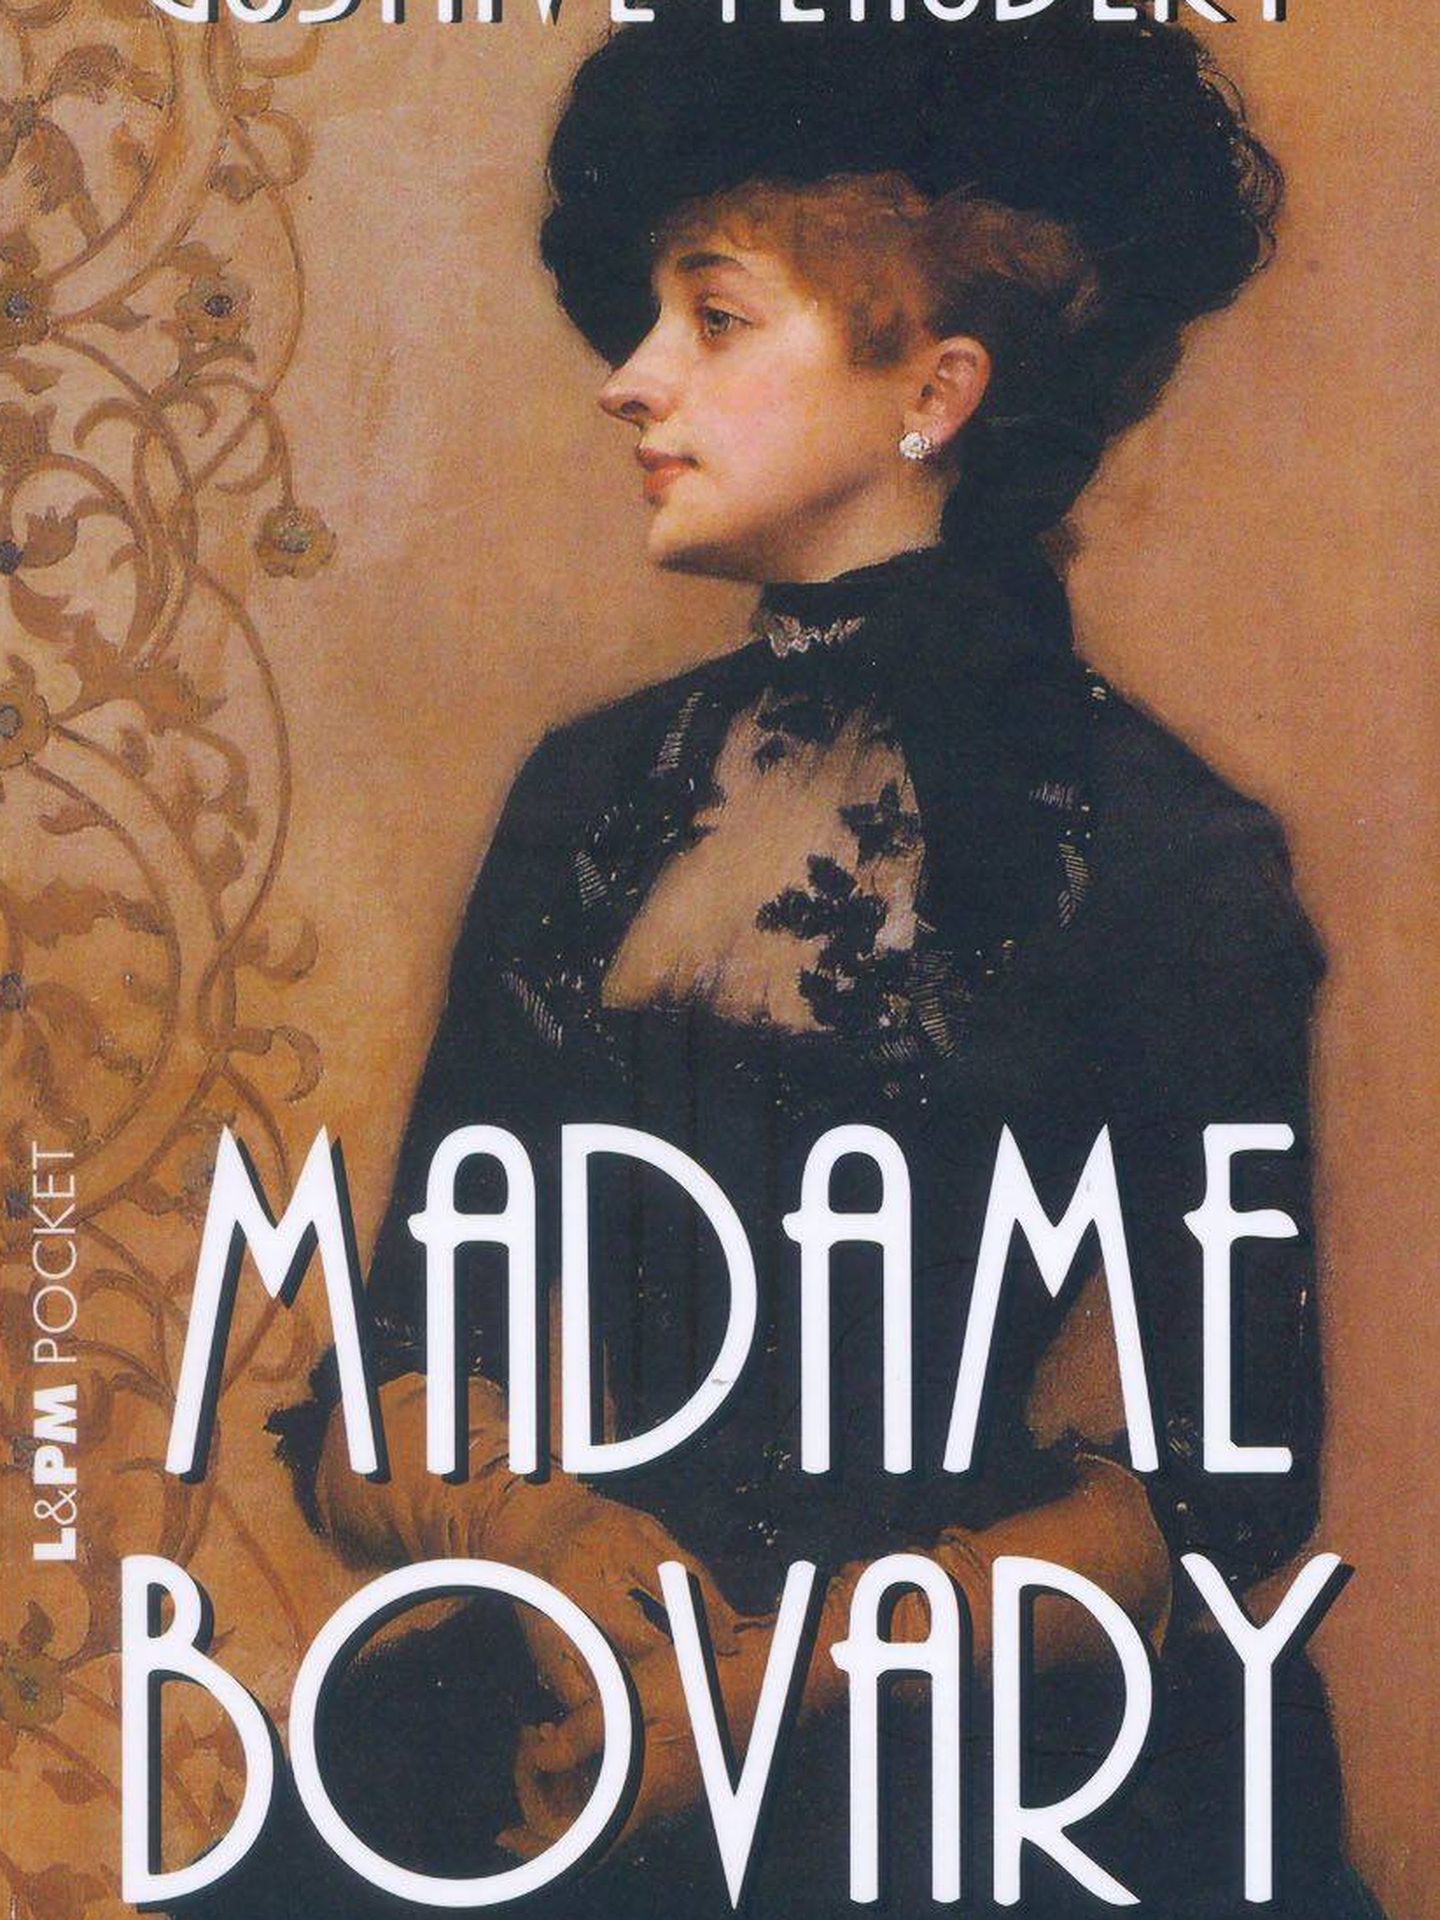 Madame Bovary, de Gustave Flaubert.